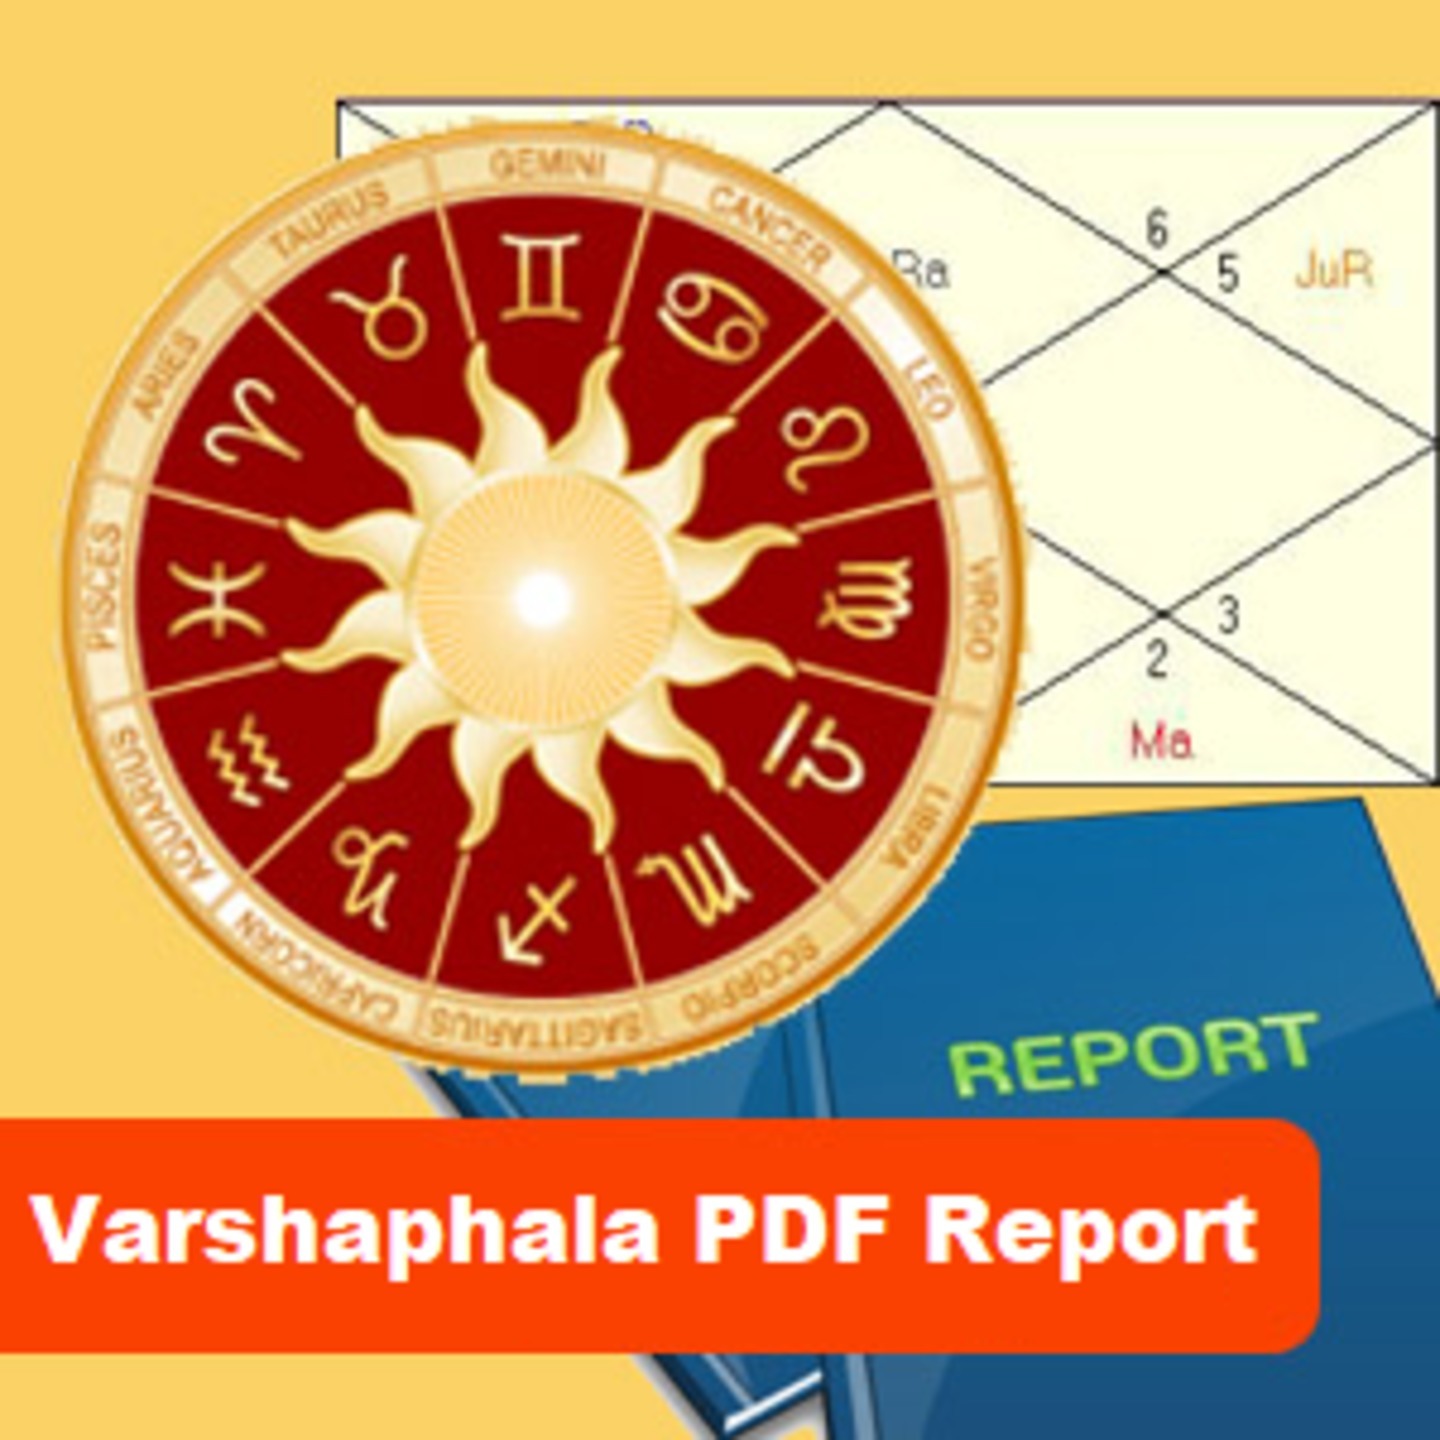 Varshaphala  Annual Horoscope PDF Report